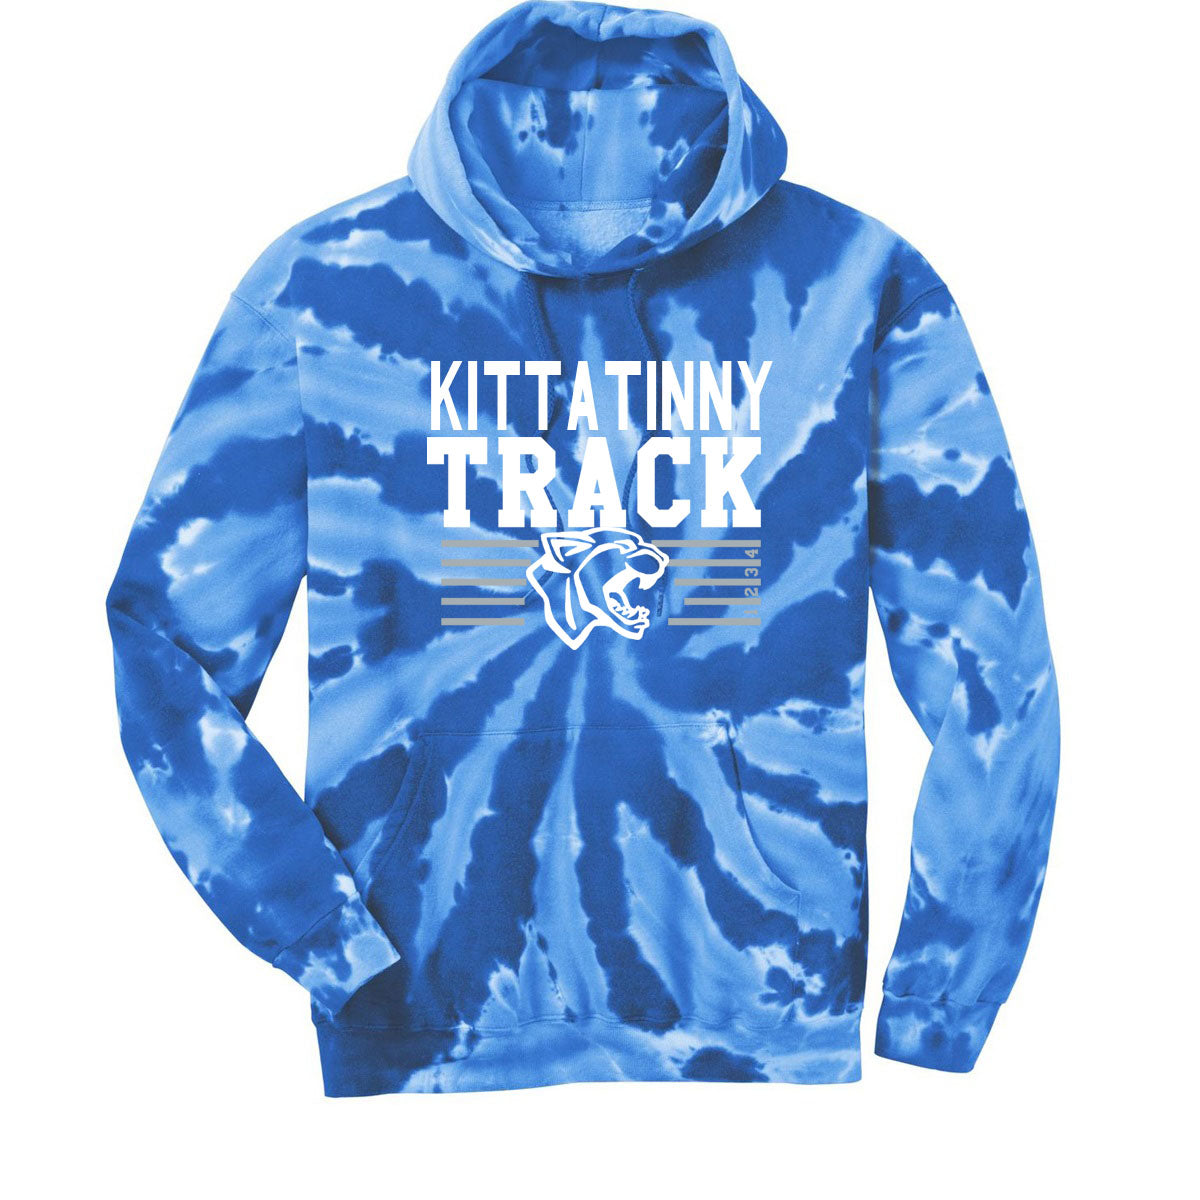 Kittatinny Track Tie-Dye Hooded Sweatshirt Design 5